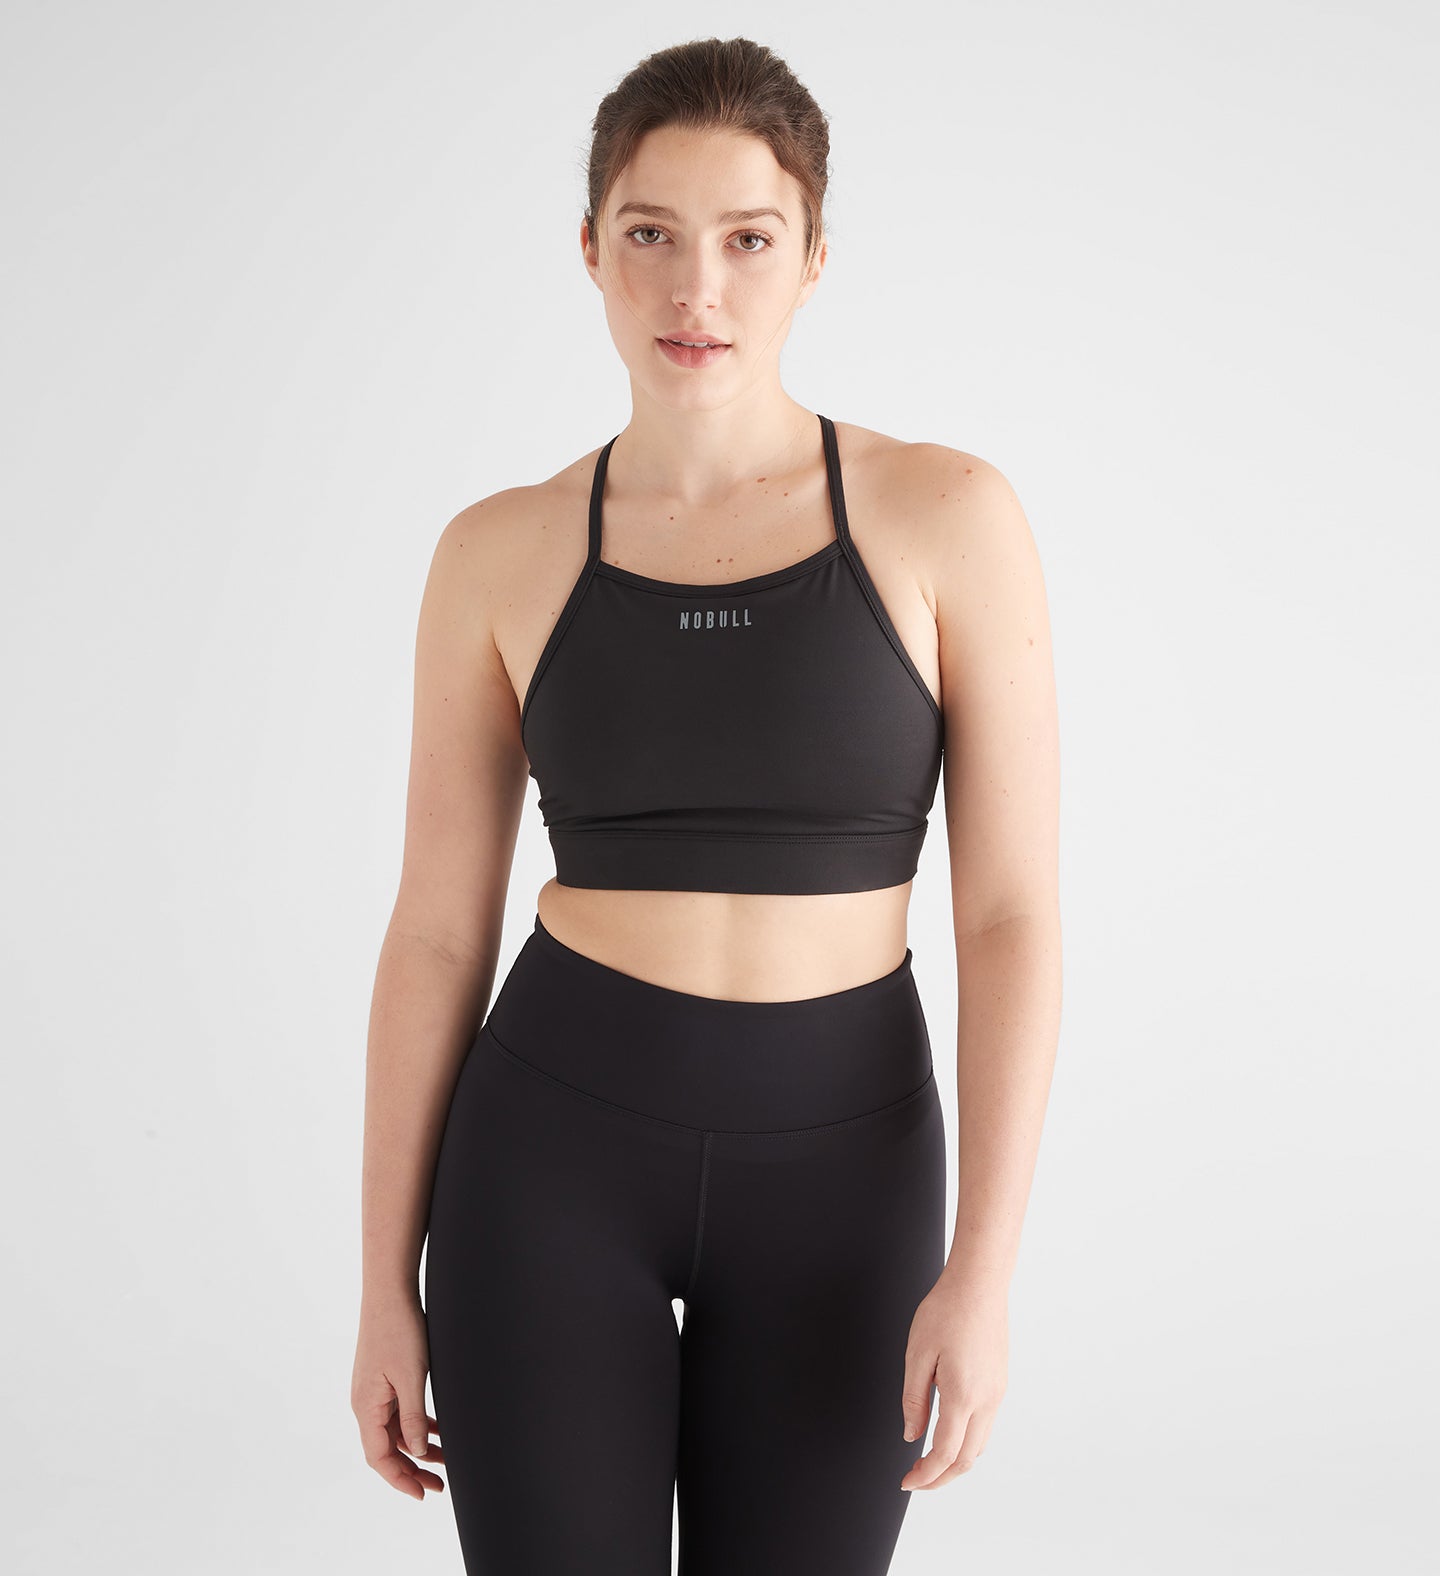 Women's Crop Tank Sports Bra Padded Athletic Yoga Top - Dark Grey / XS